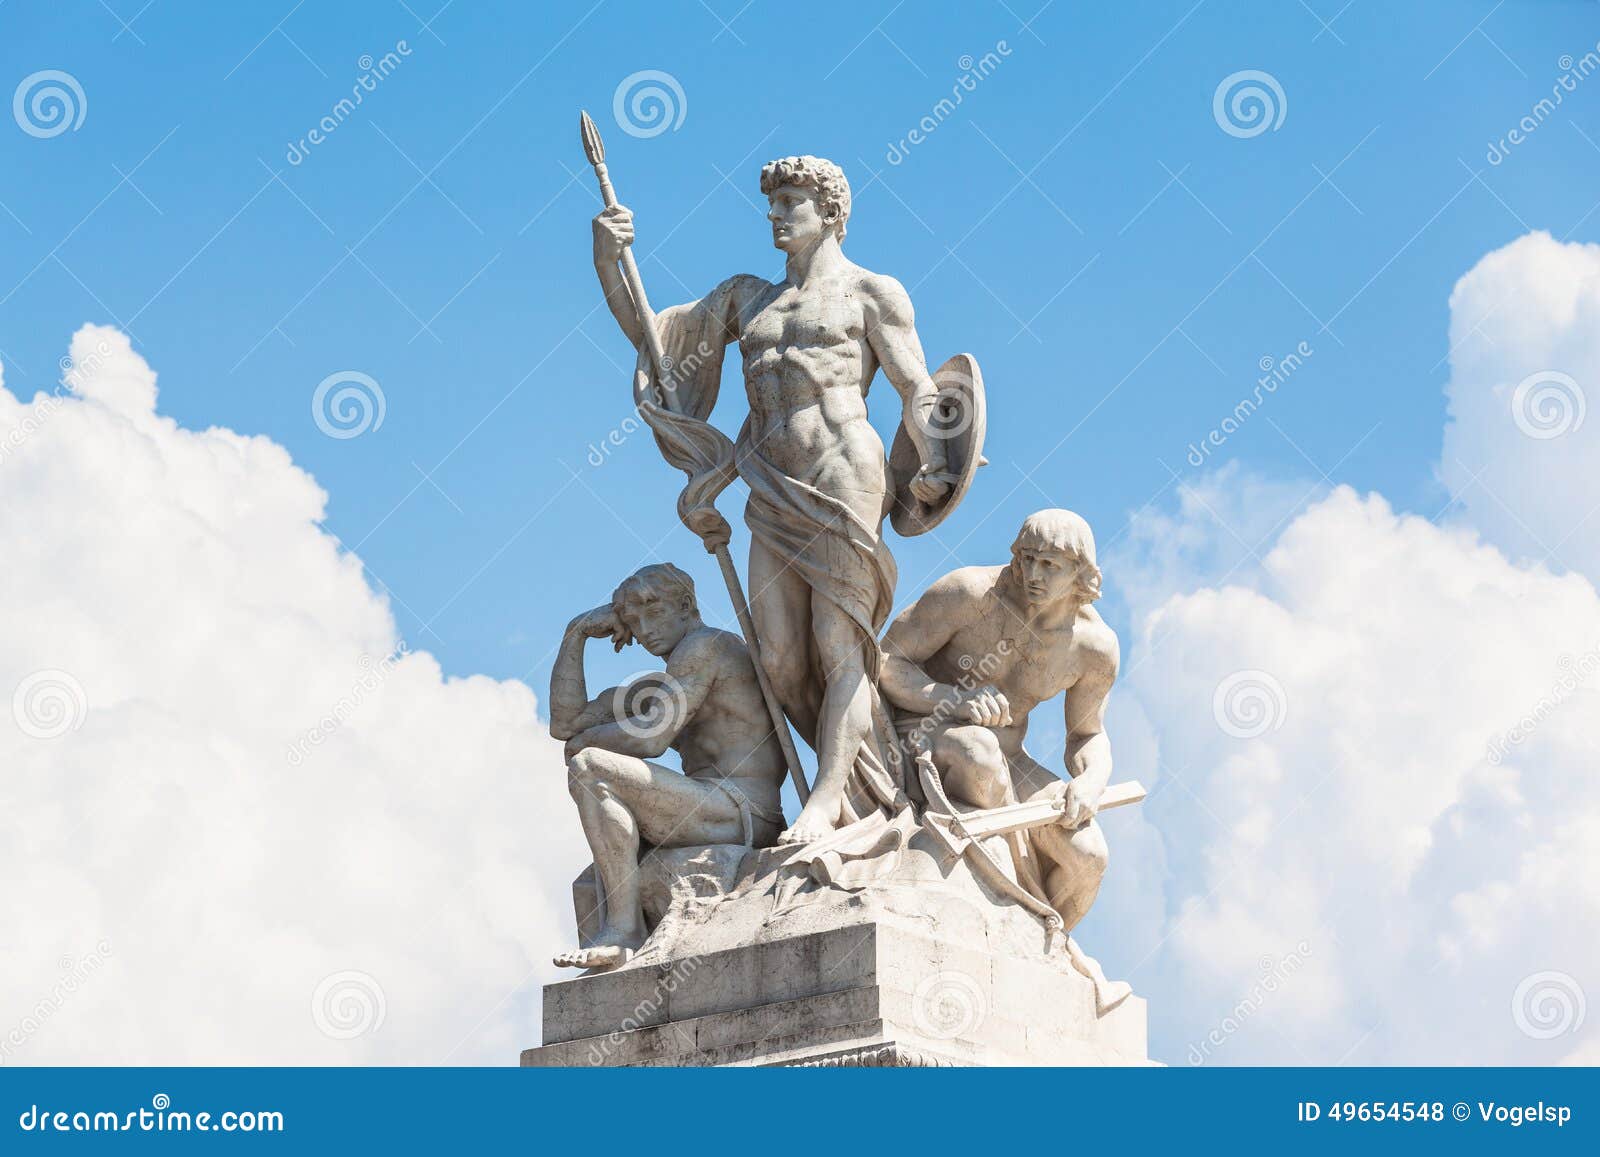 the statue in front of monumento nazionale a vittorio emanuele i